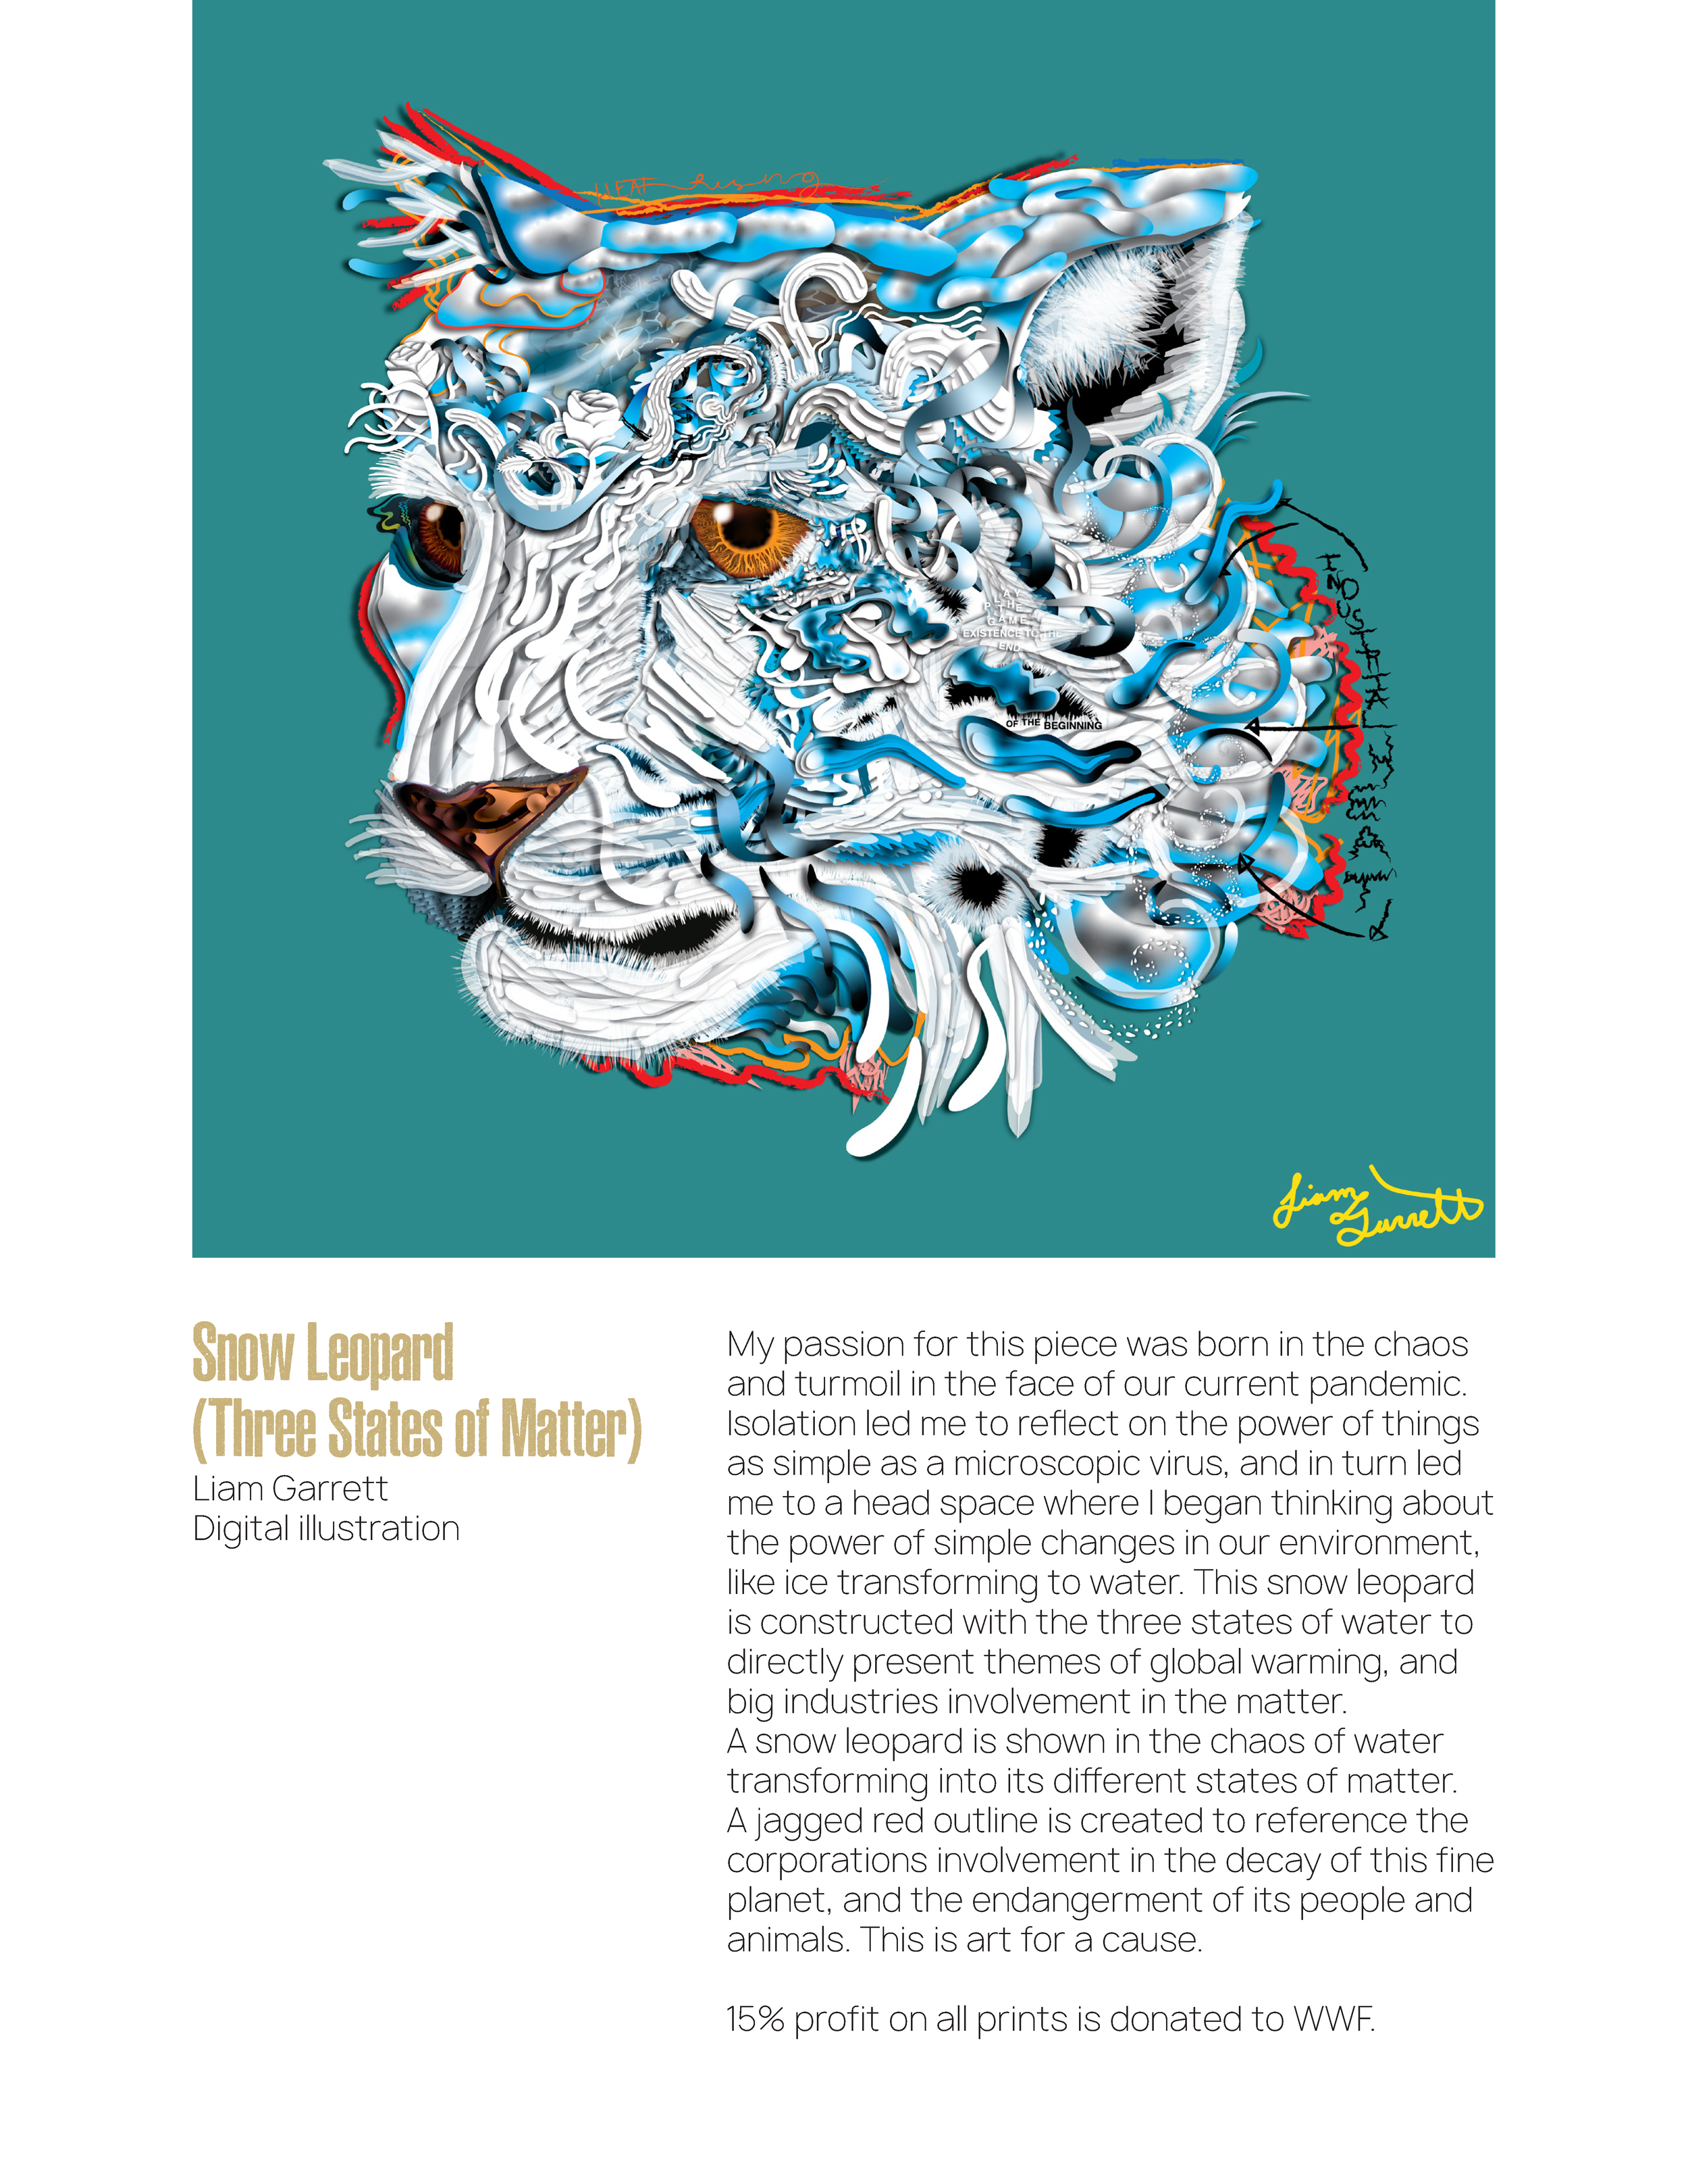 Snow Leopard (Three States of Matter) by Liam Garrett, Digital Illustration